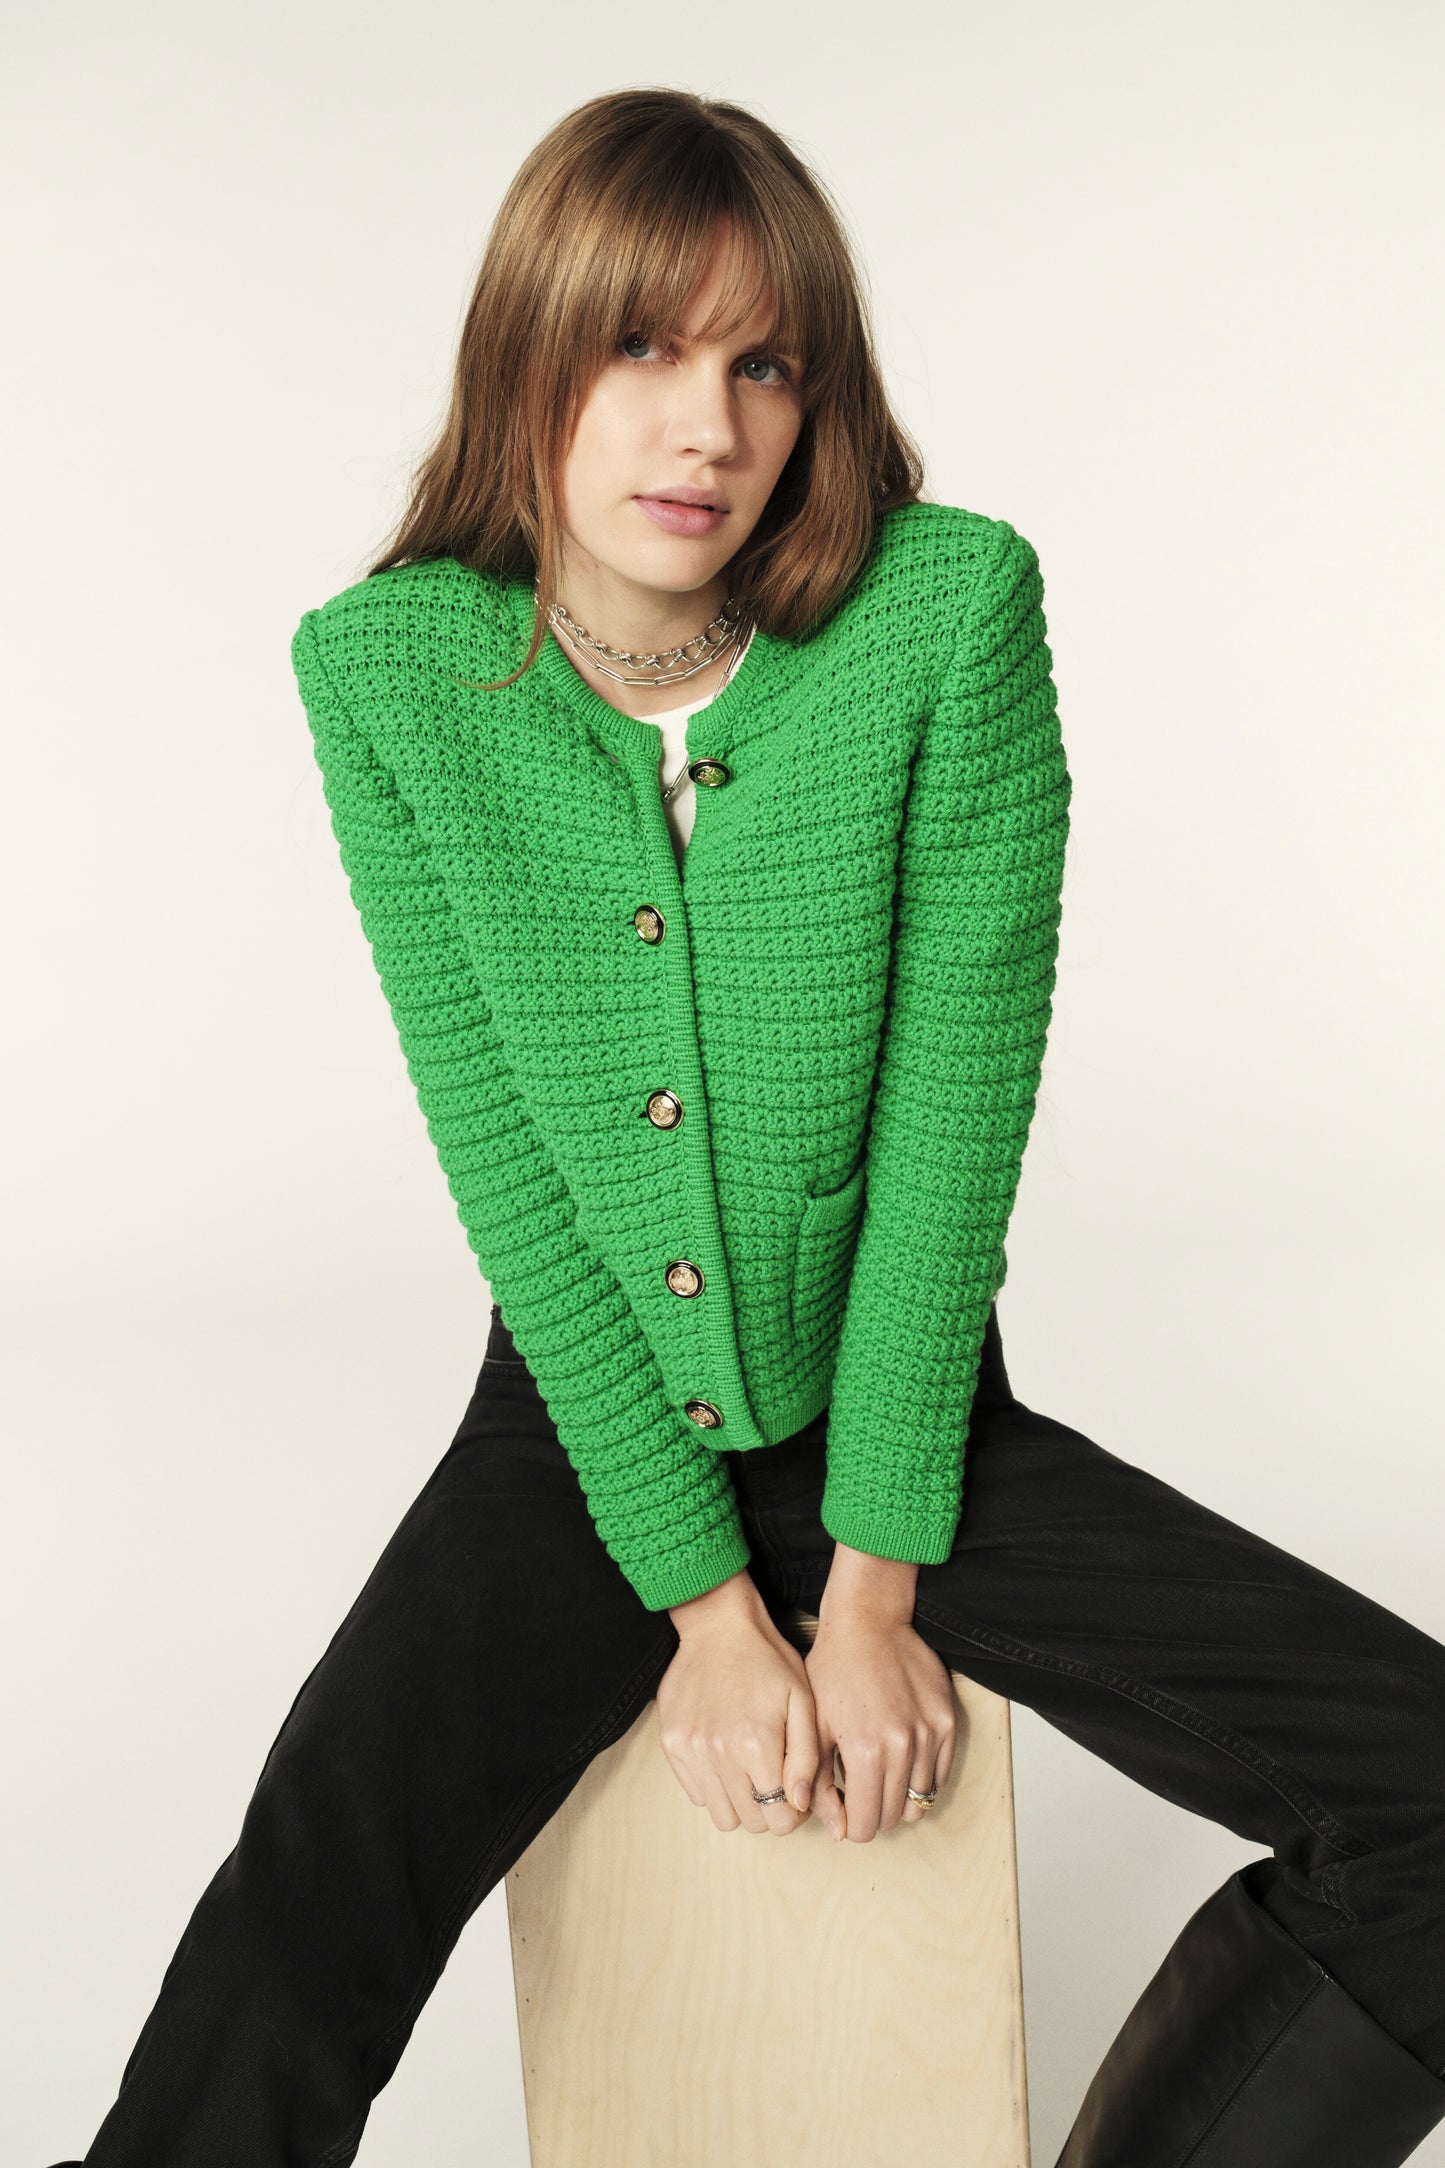 Ba&sh - Gaspard Knitted Cardigan - Green